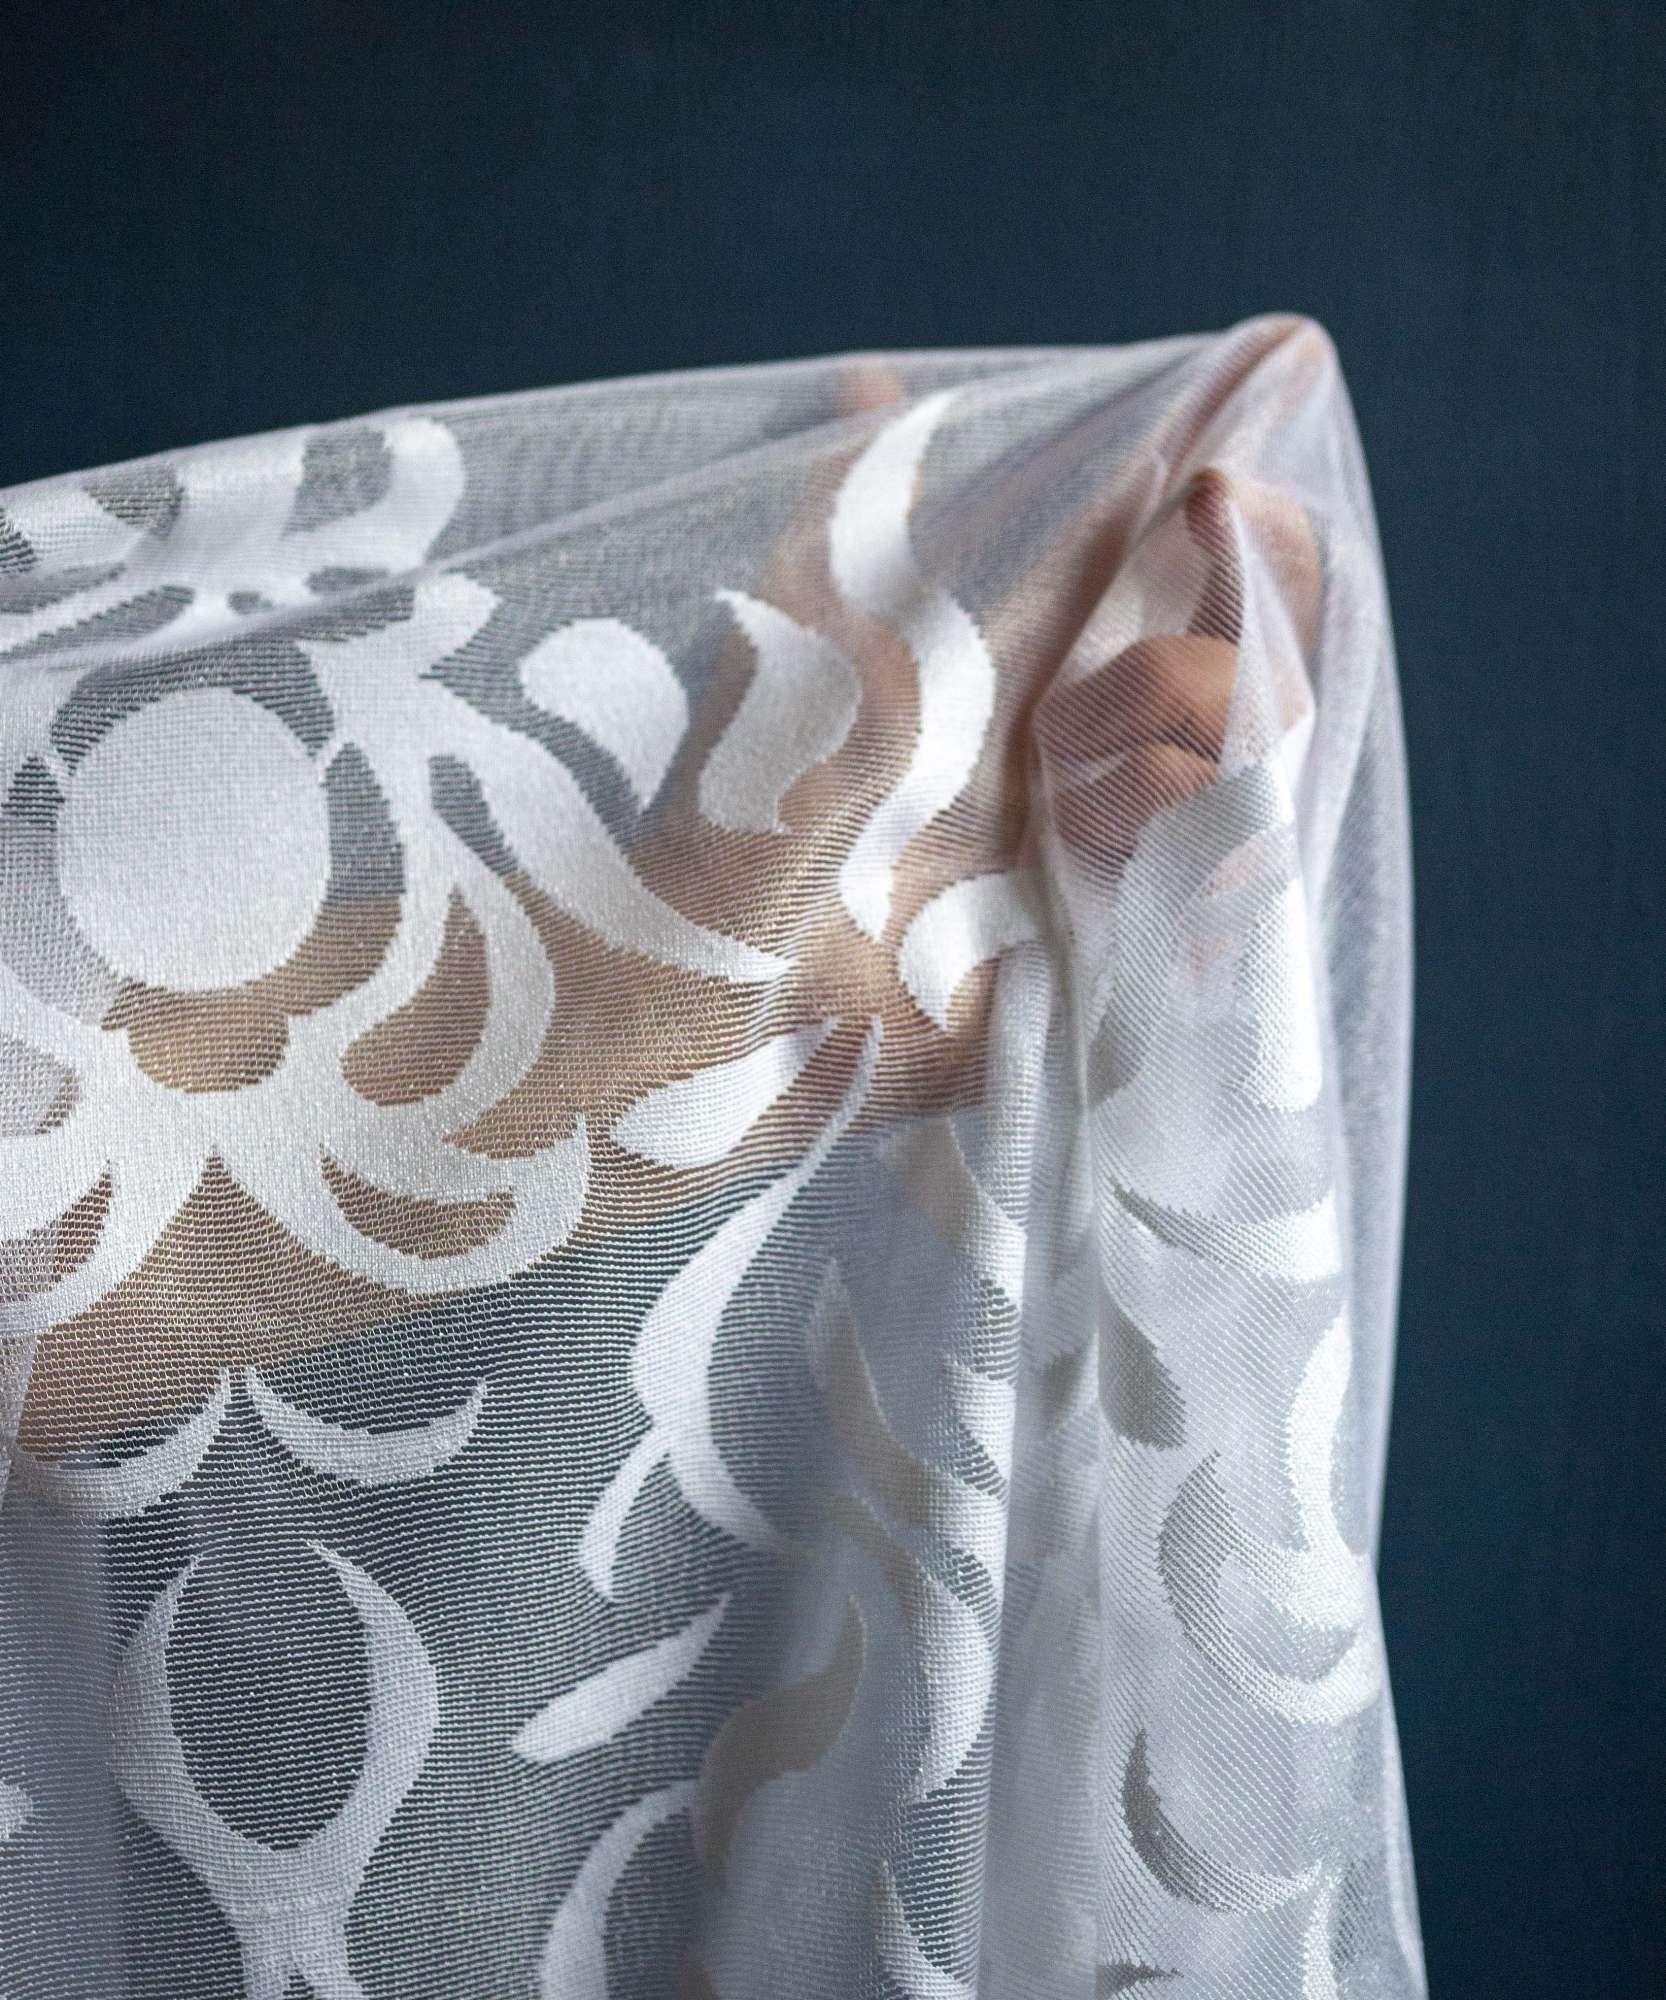 Net curtain fabric